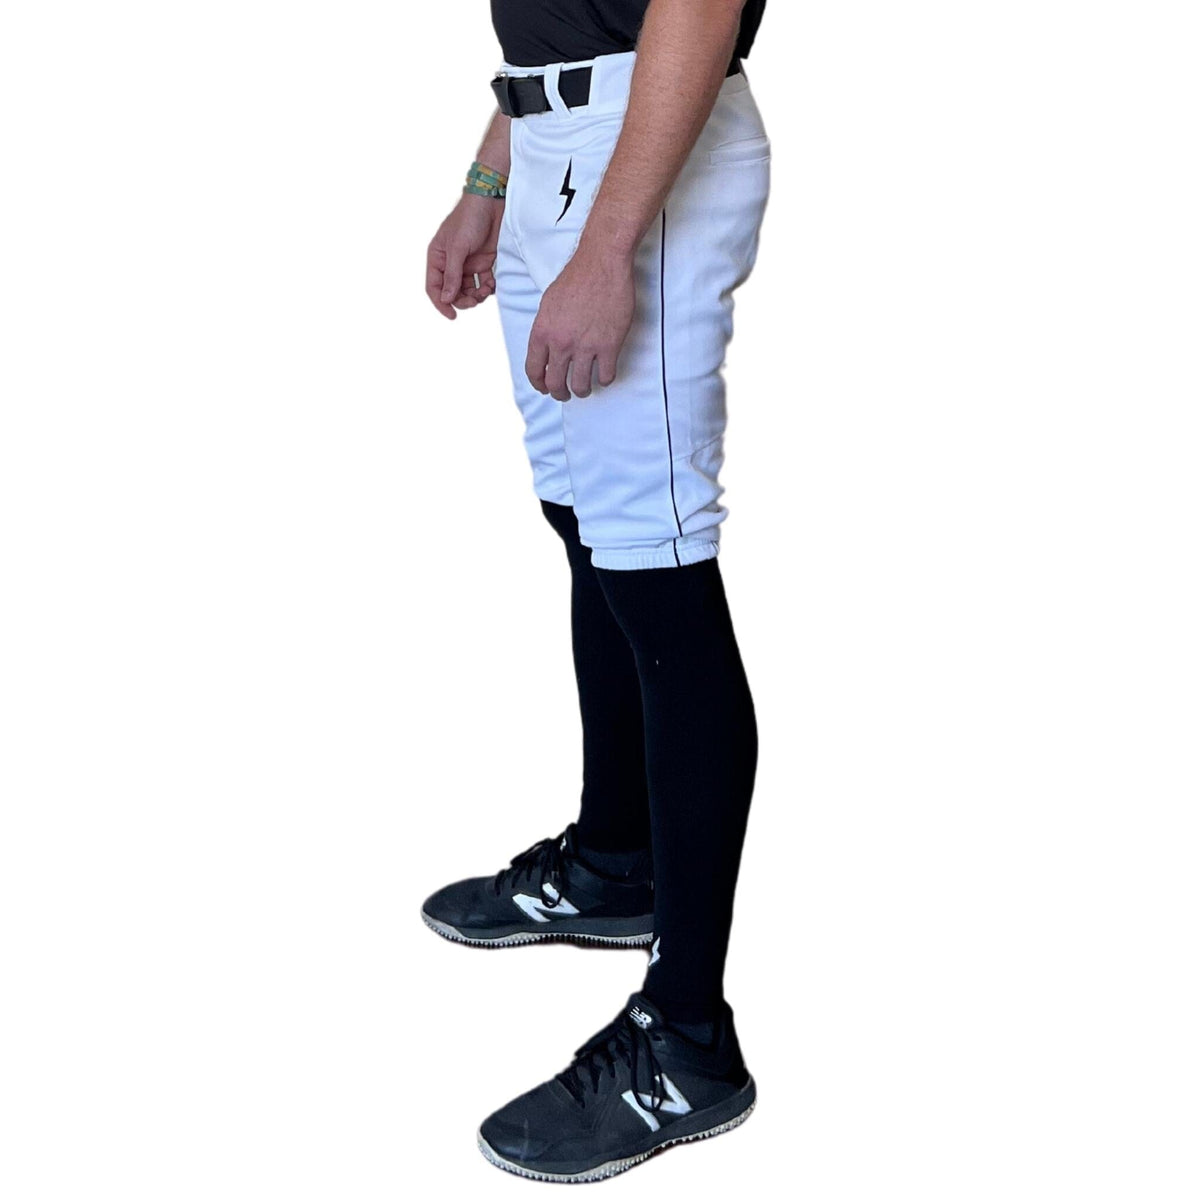 Bruce Bolt Premium Pro Baseball Short - White w/ Black, Yth Small